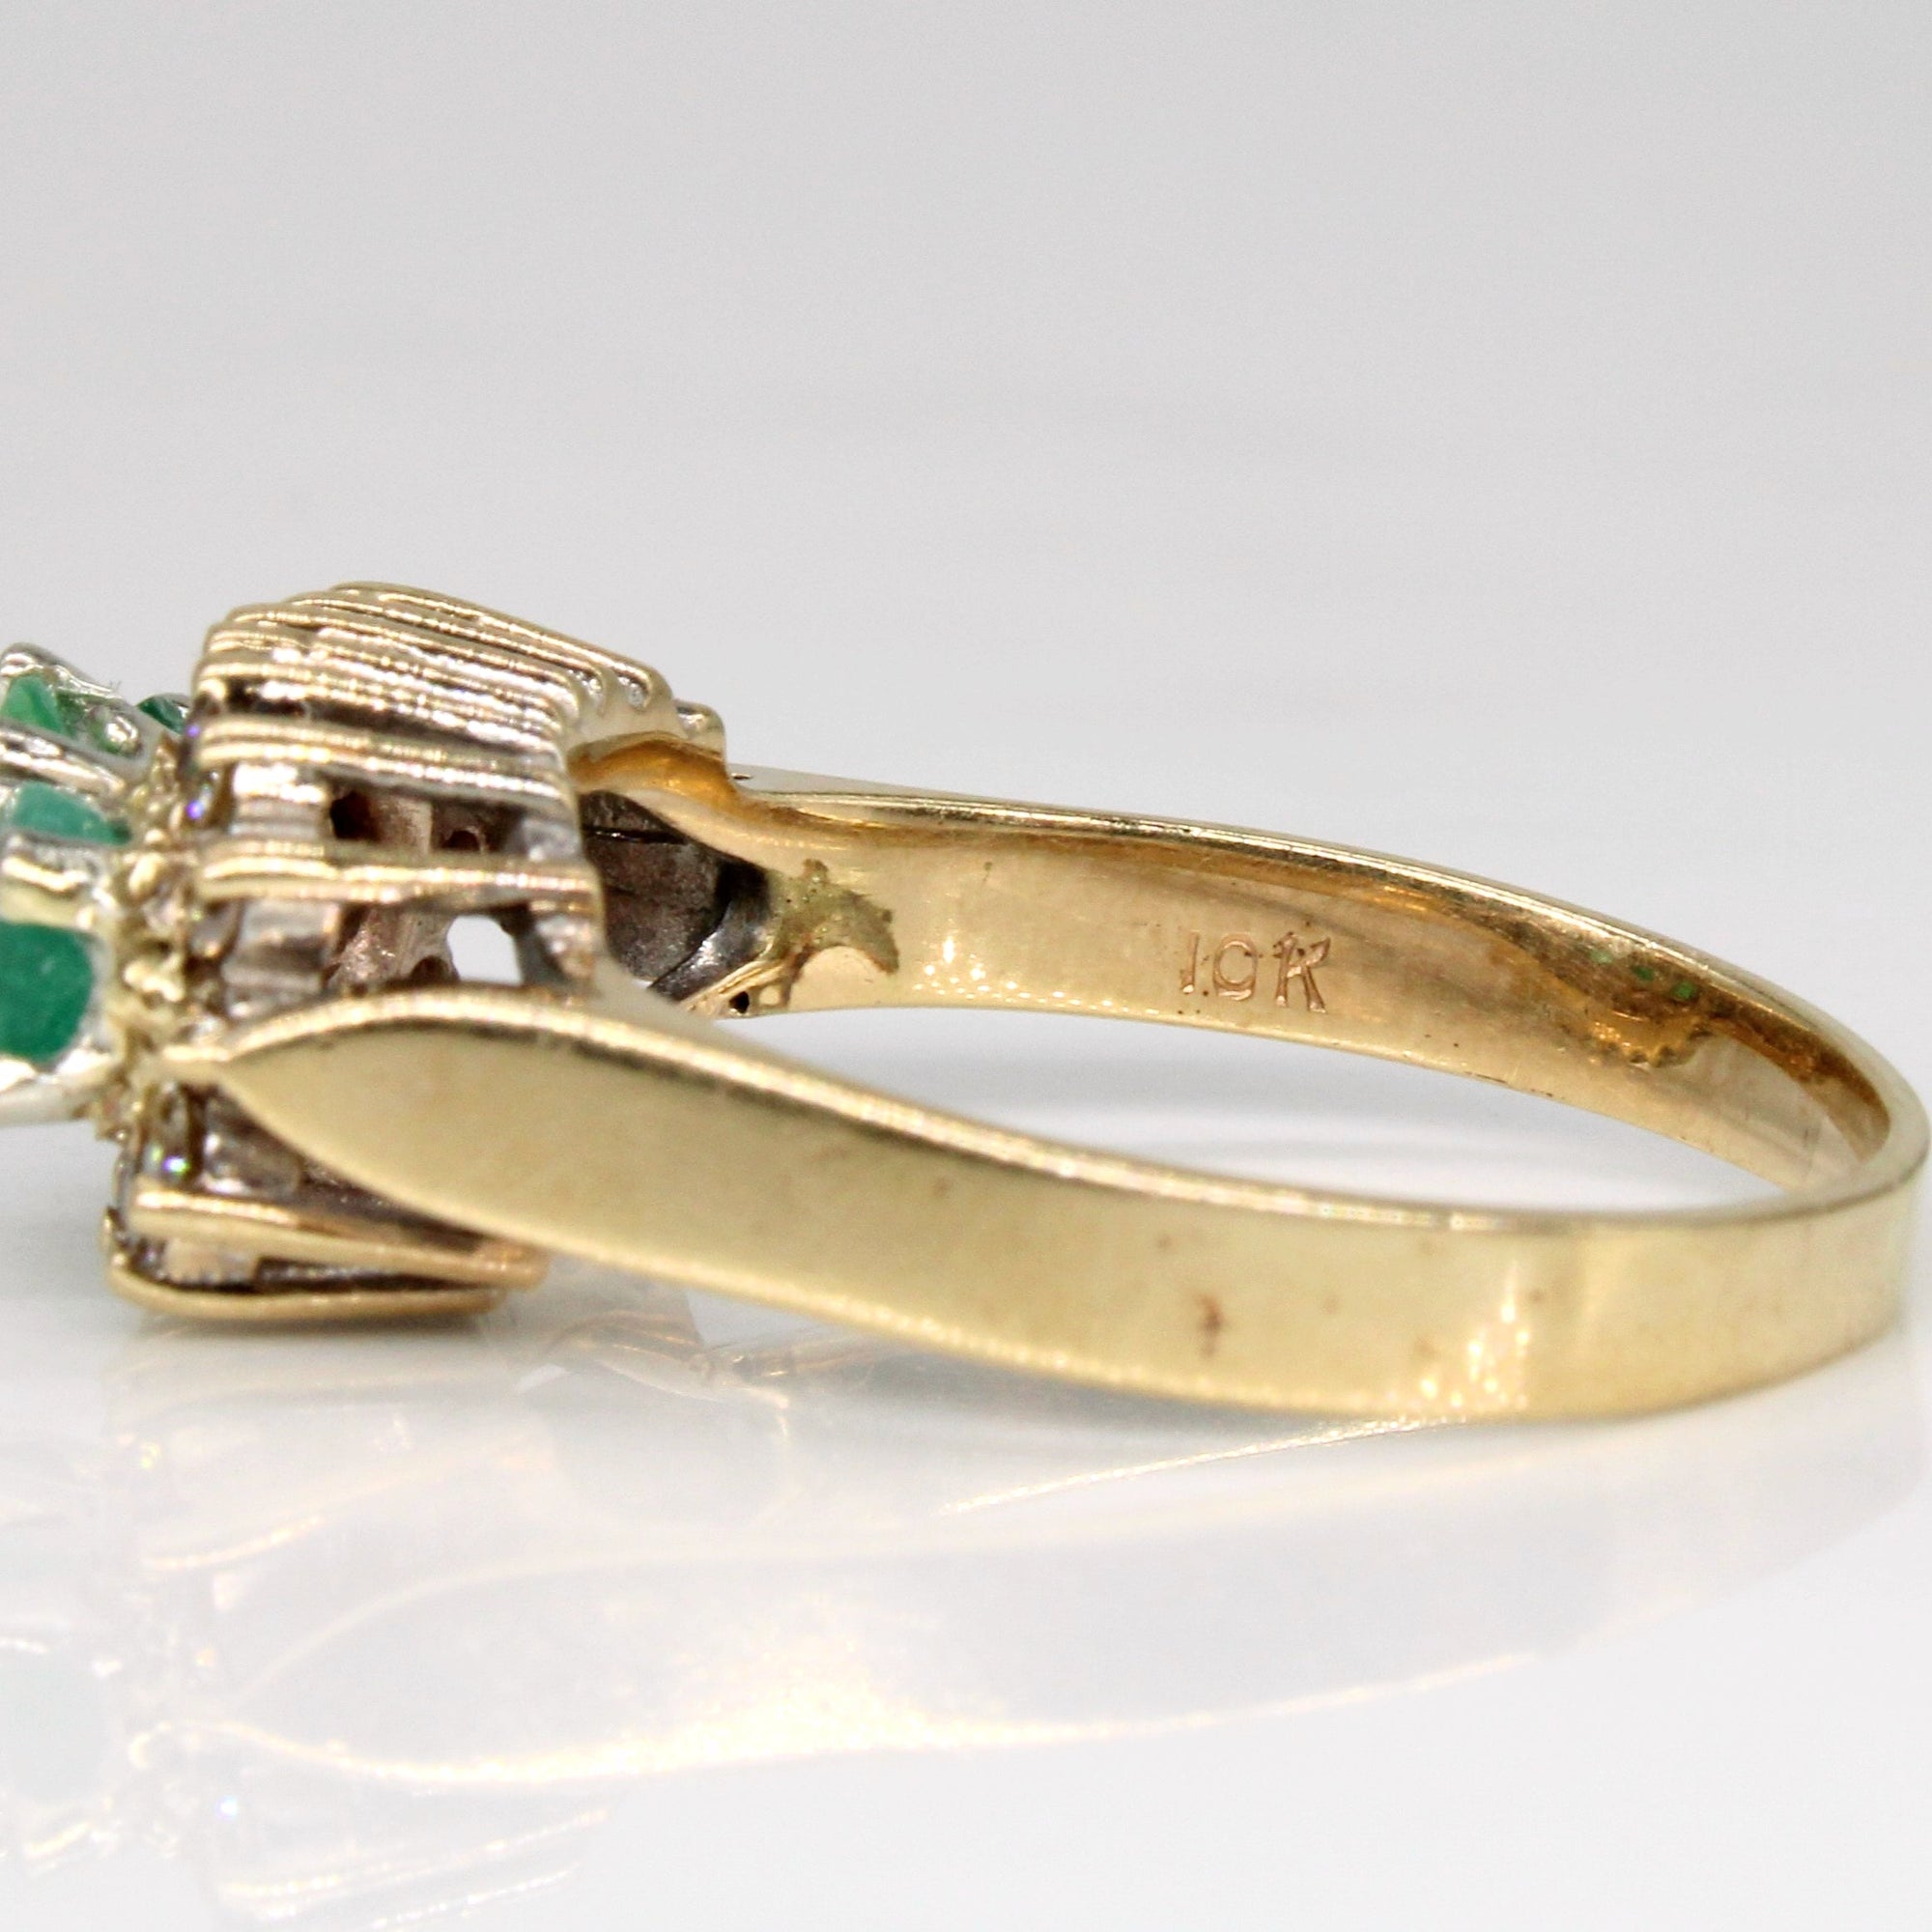 Emerald & Diamond Ring | 0.80ctw, 0.36ctw | SZ 7.75 |